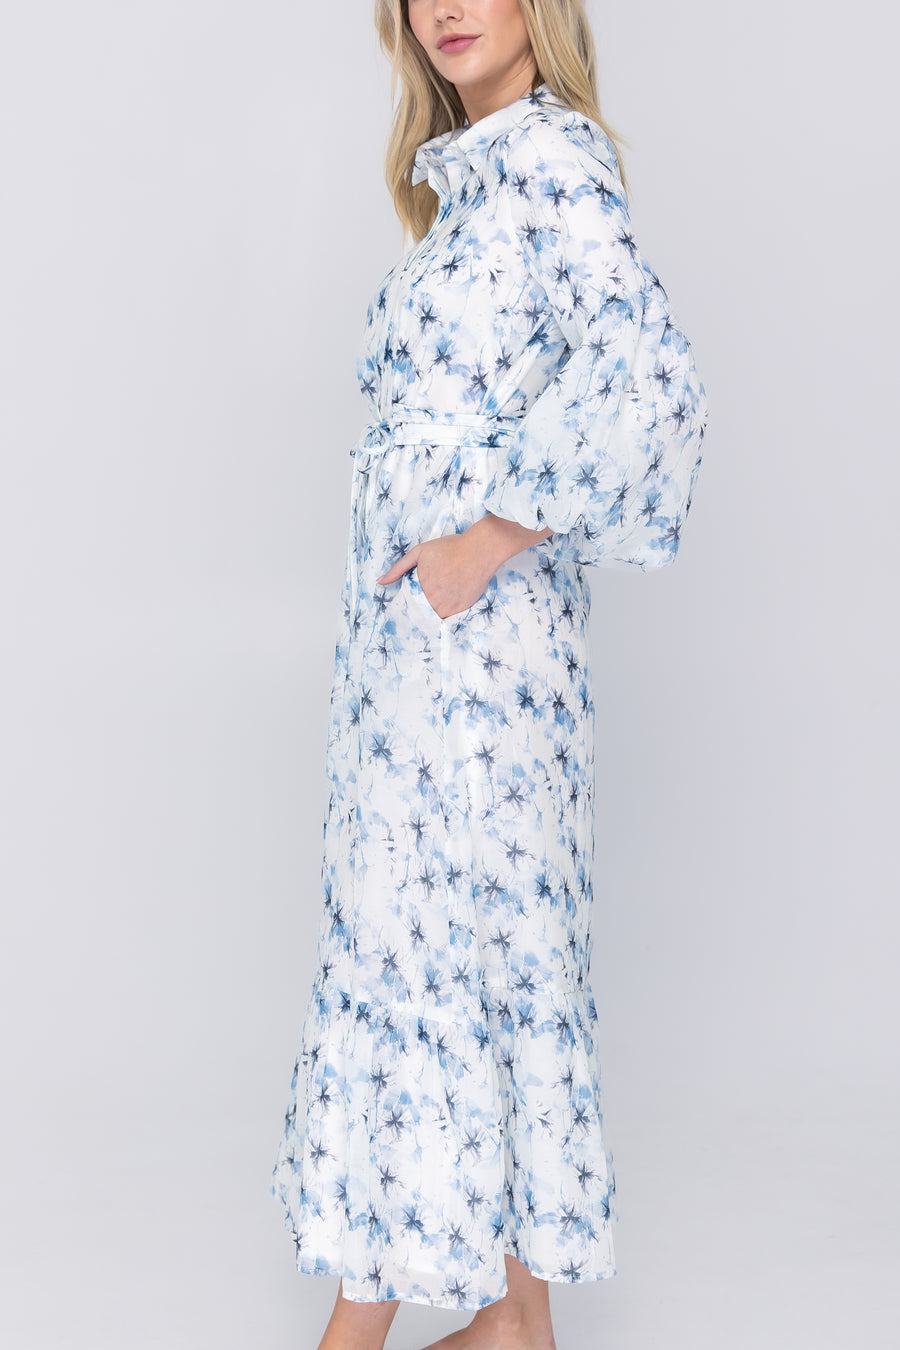 ALICE DRESS Long Sleeve (BLUE/WHITE)